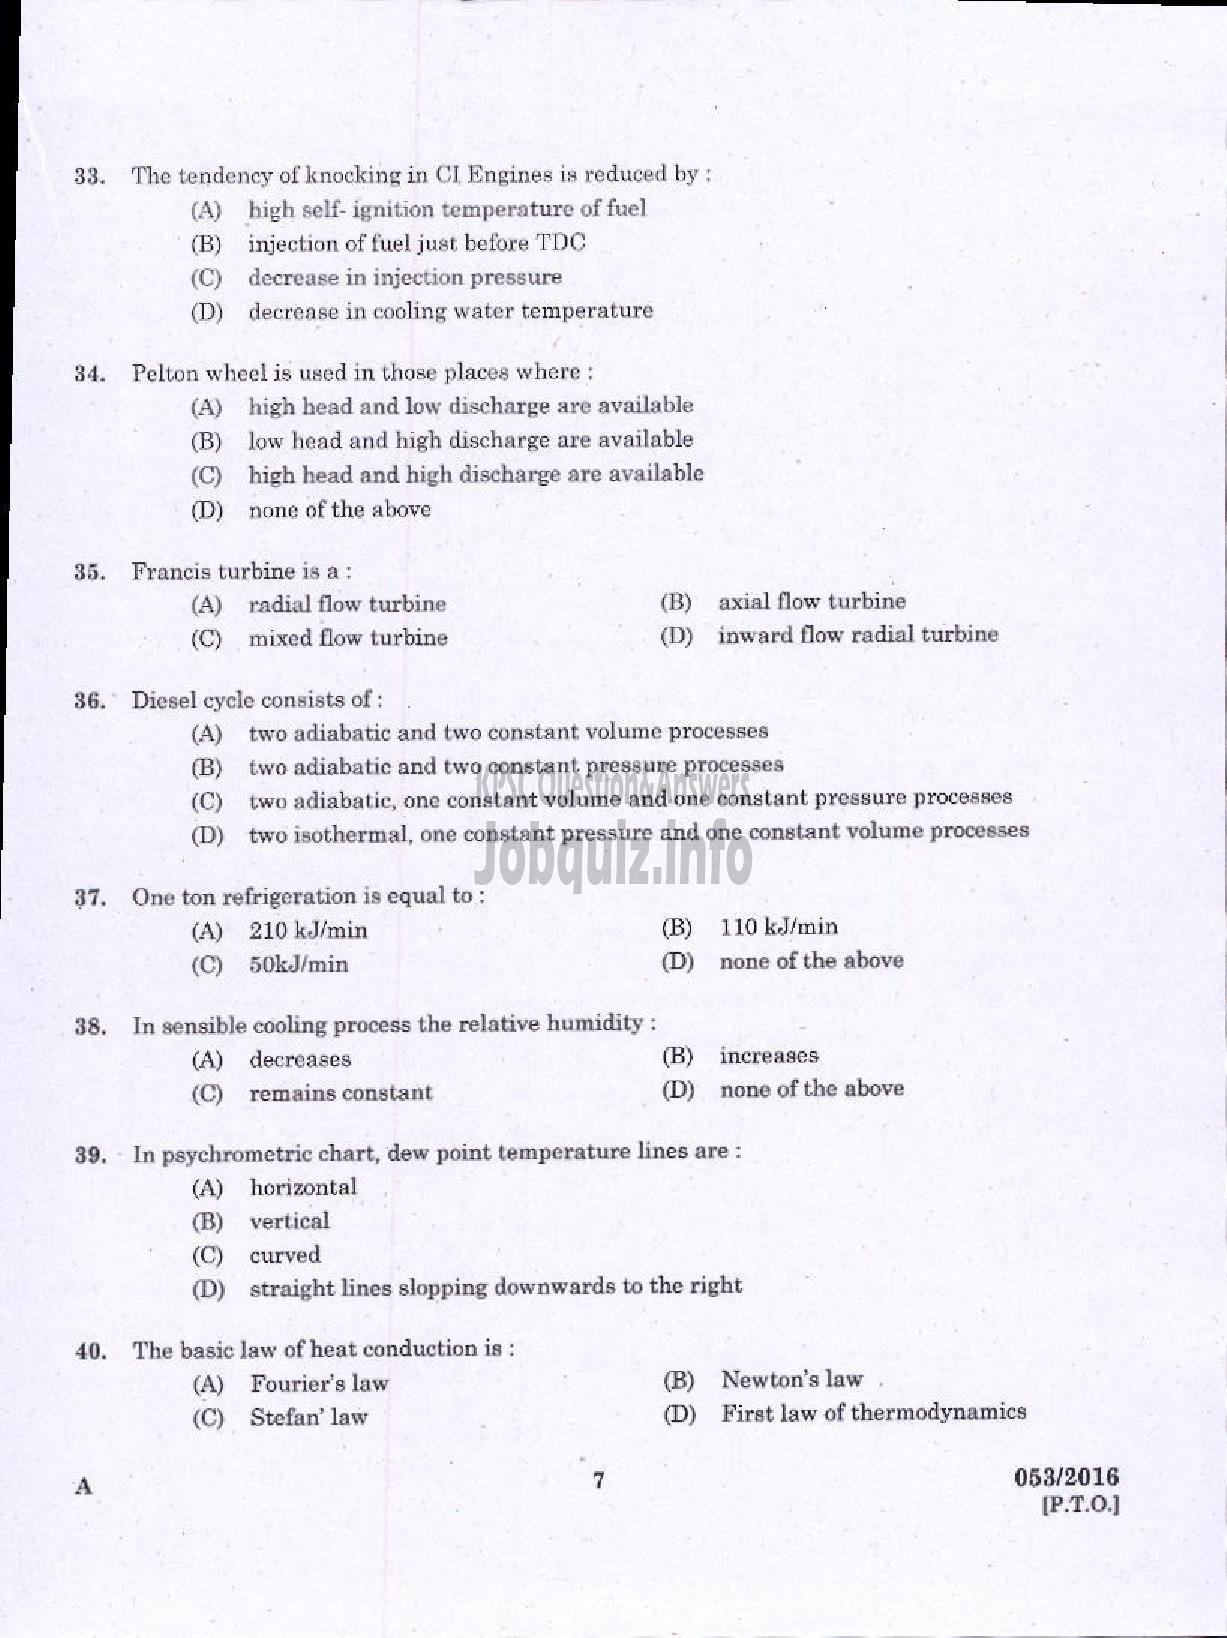 Kerala PSC Question Paper - INSPECTOR OF FACTORIES AND BOILERS GR II FACTORIES AND BOILERS-5